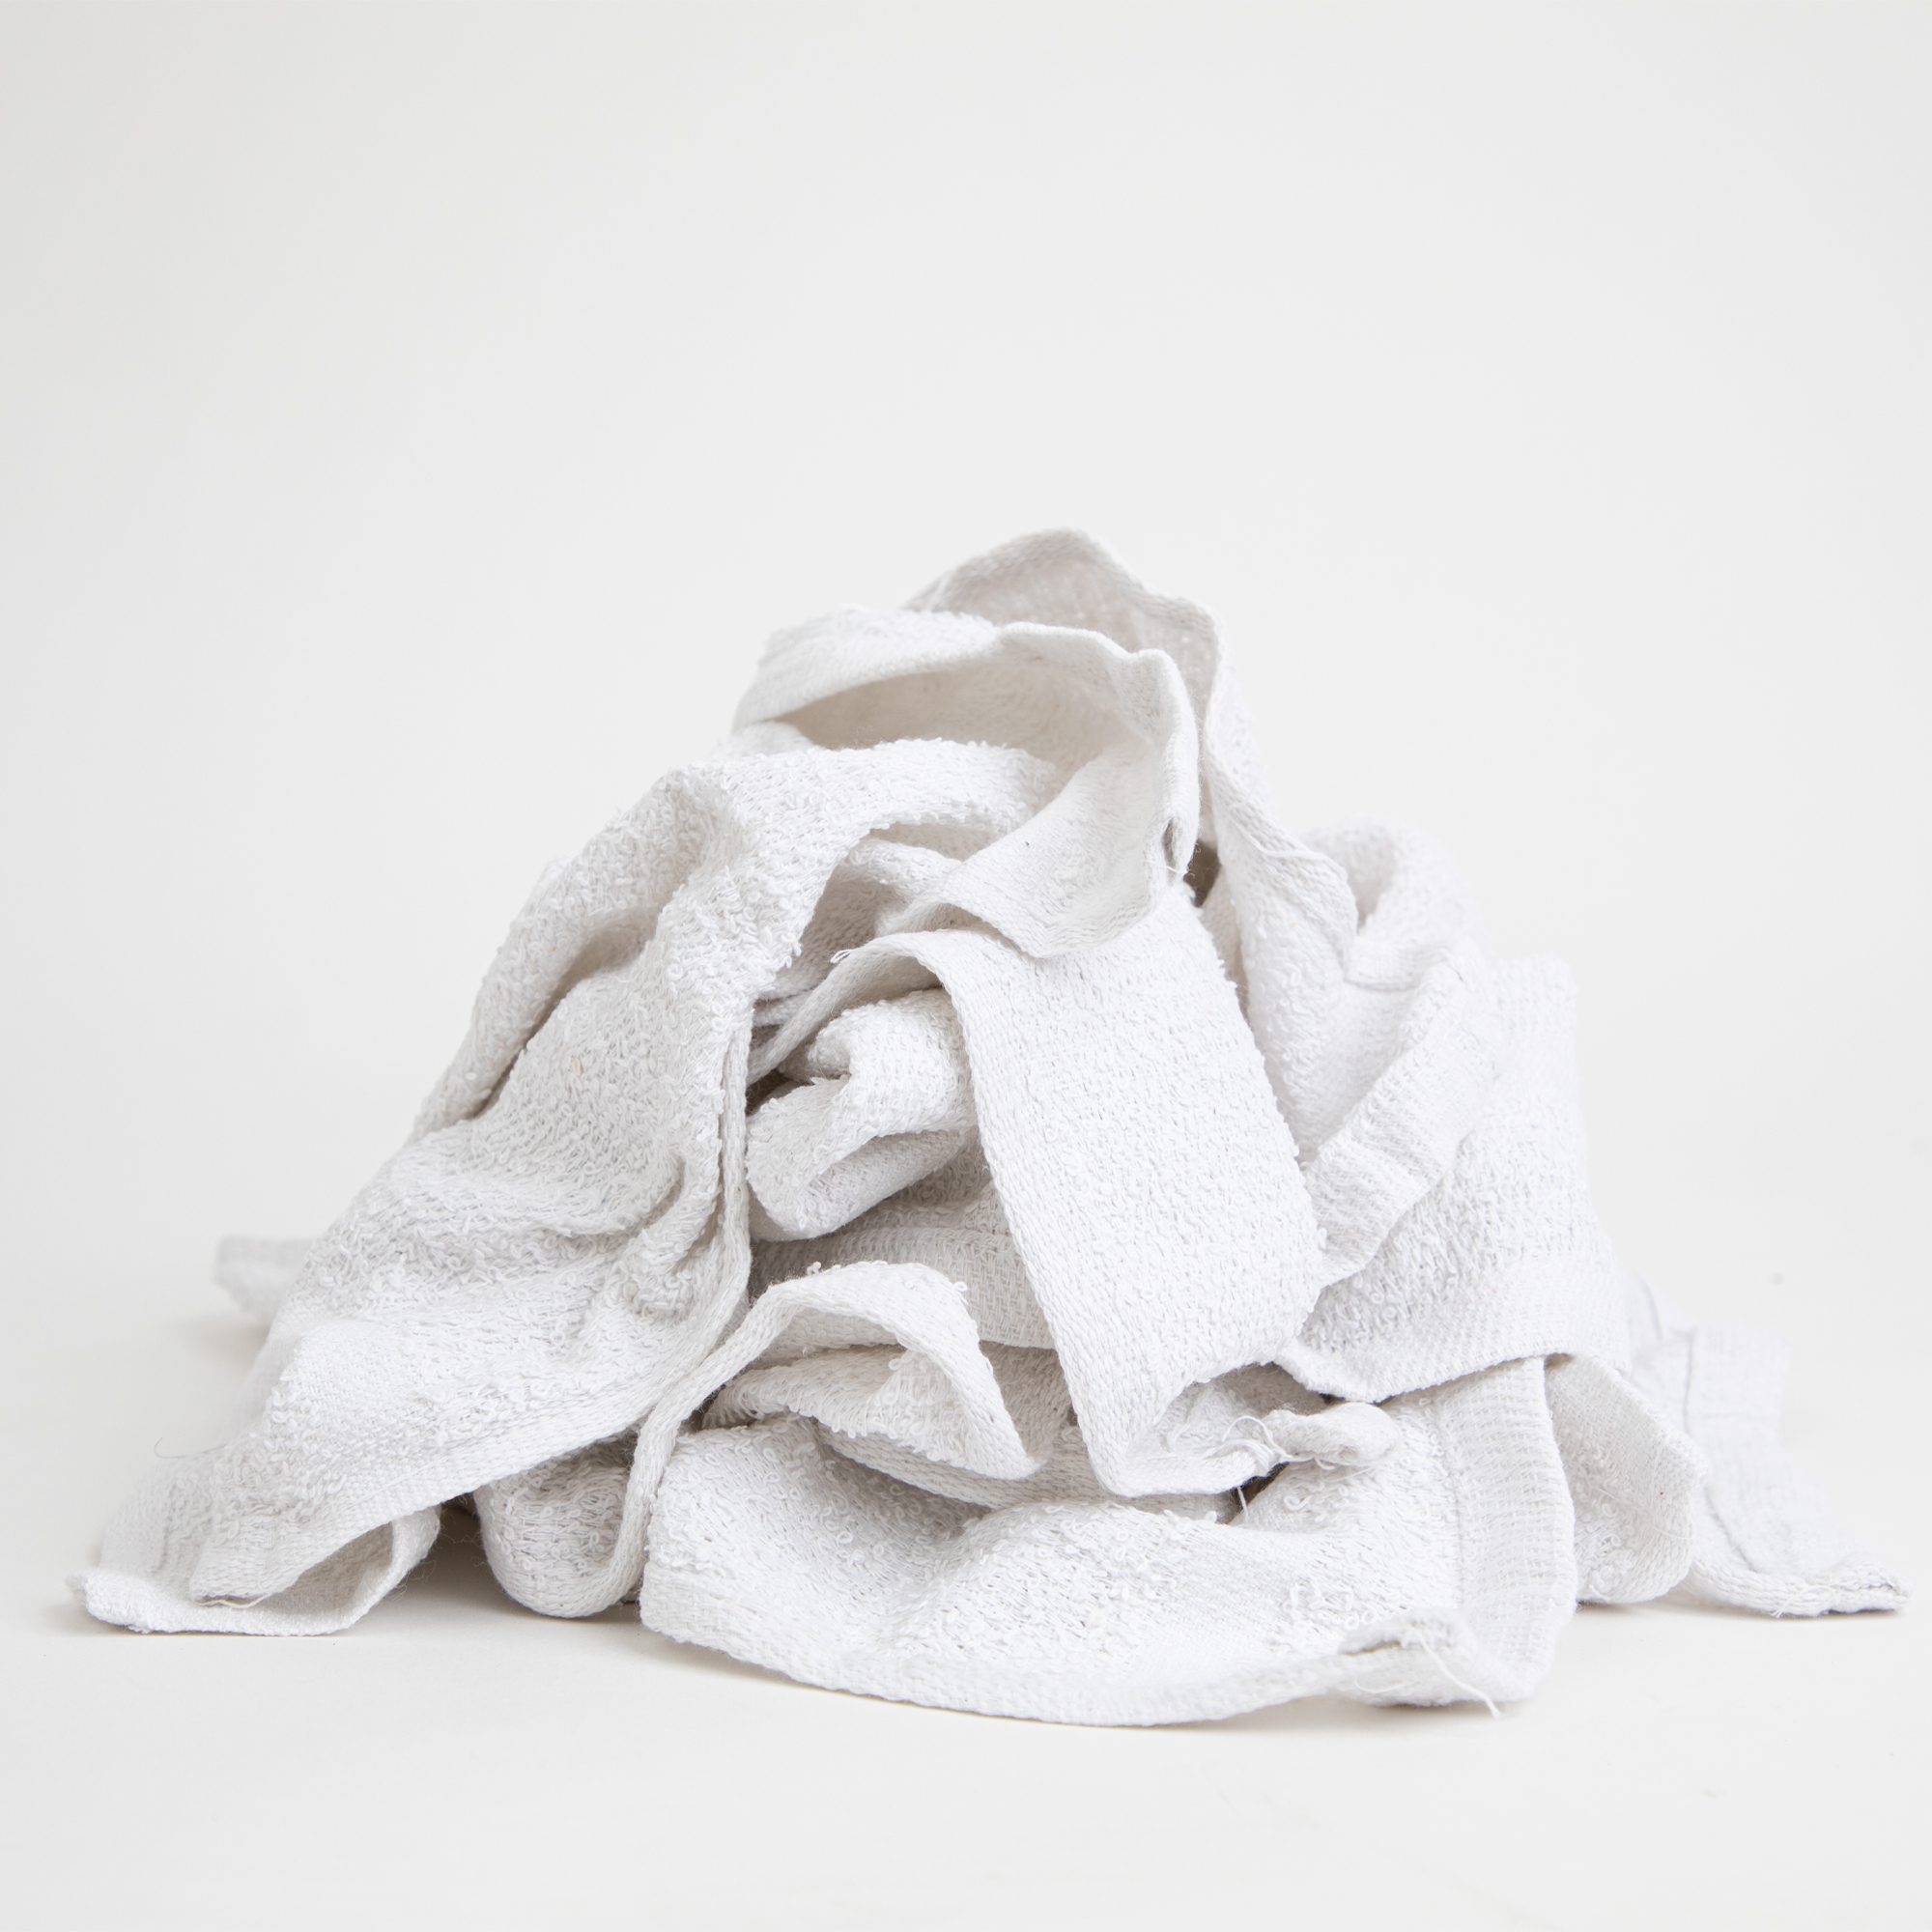 Monarch Brands White Terry Cloth Towels 25 lb. N030-W51L-25